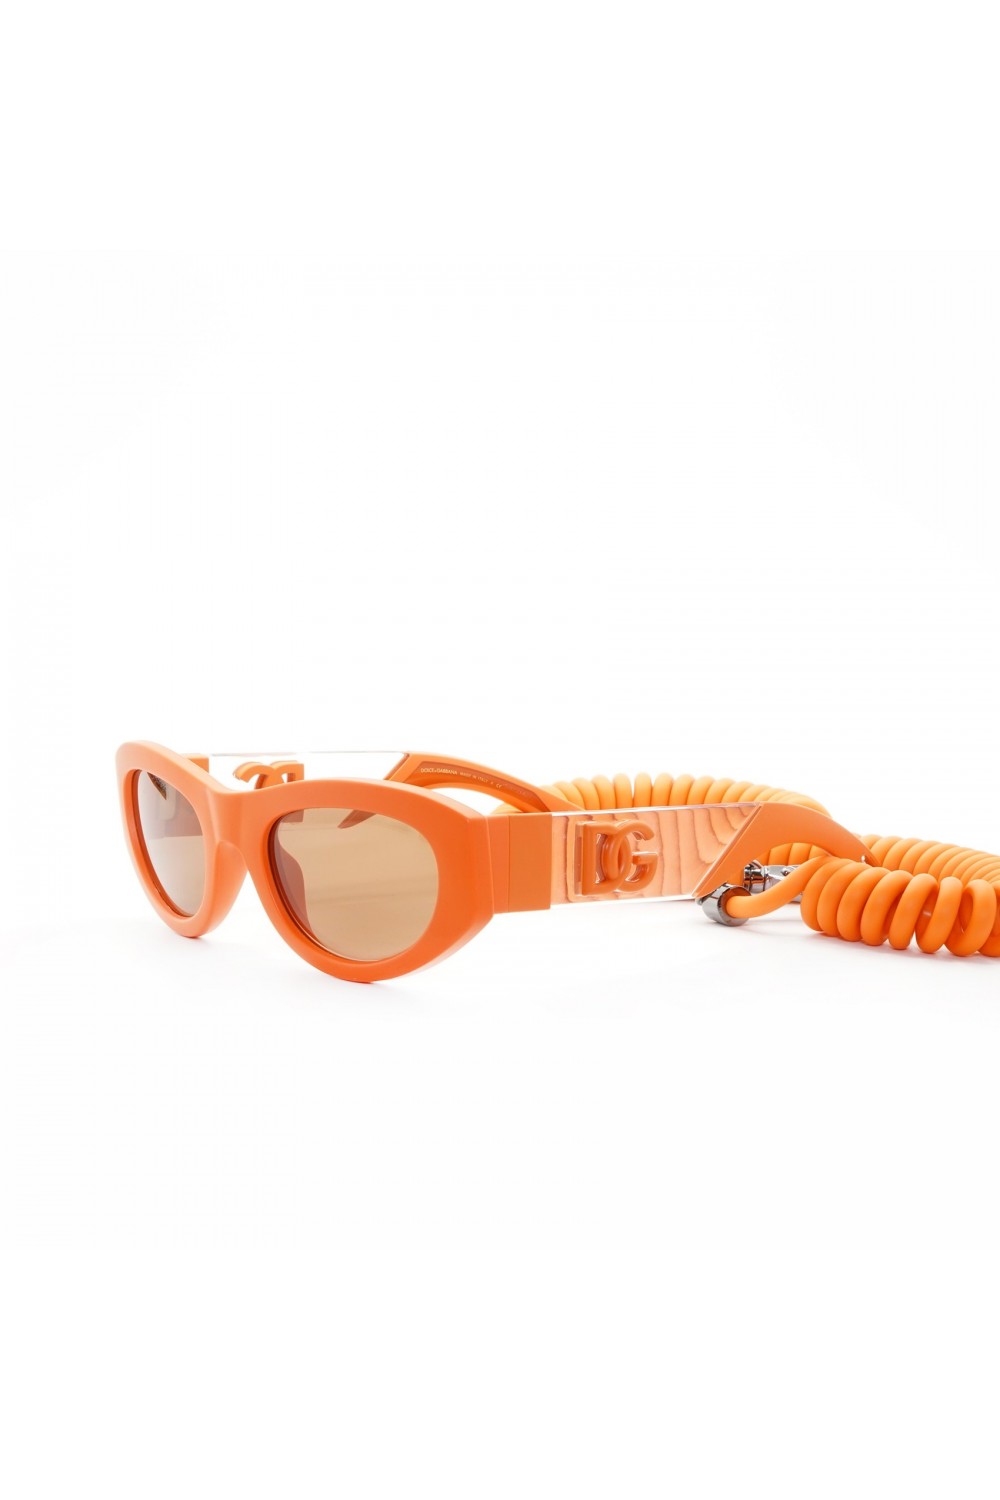 Dolce&Gabbana - Occhiali da sole in celluloide ovali unisex arancione - DG6174